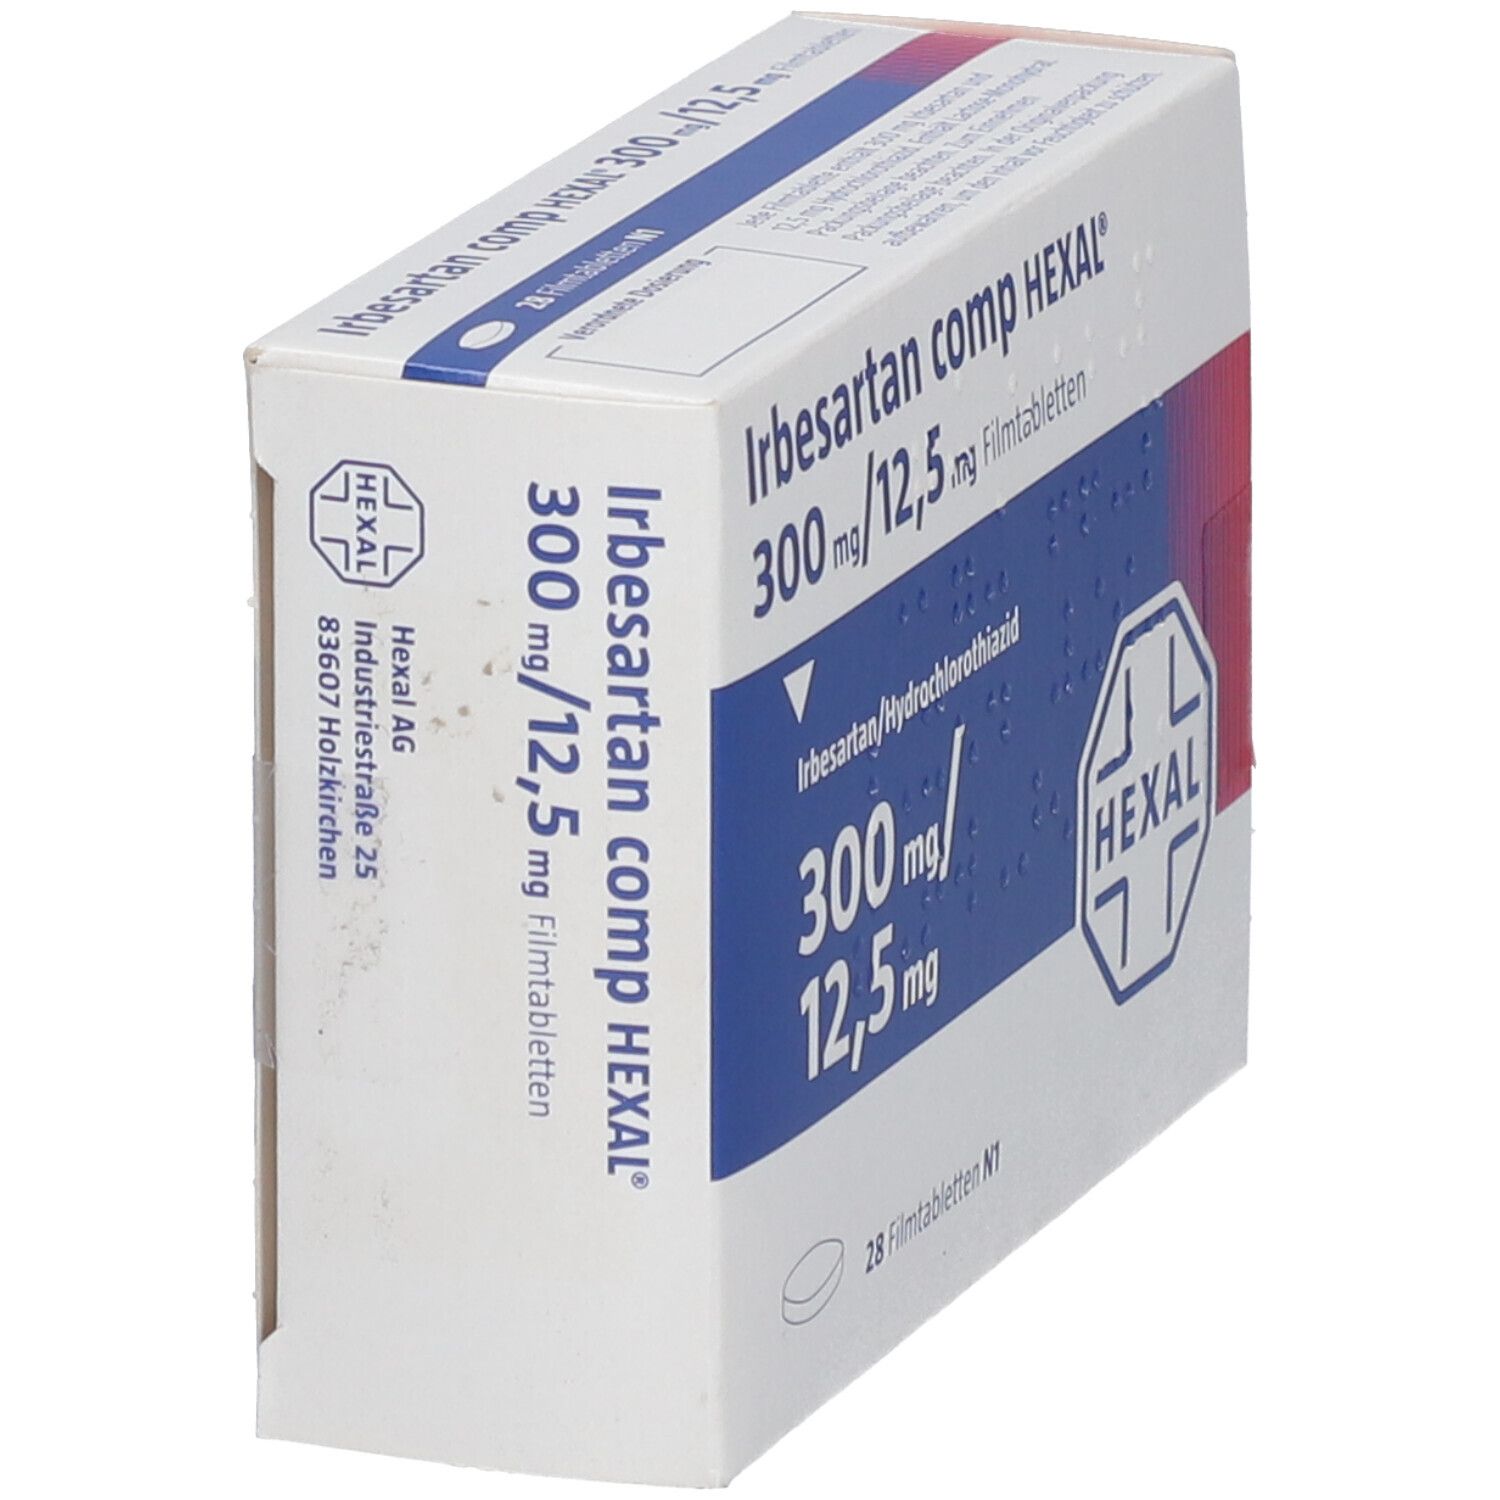 Irbesartan comp HEXAL® 300 mg/12,5 mg